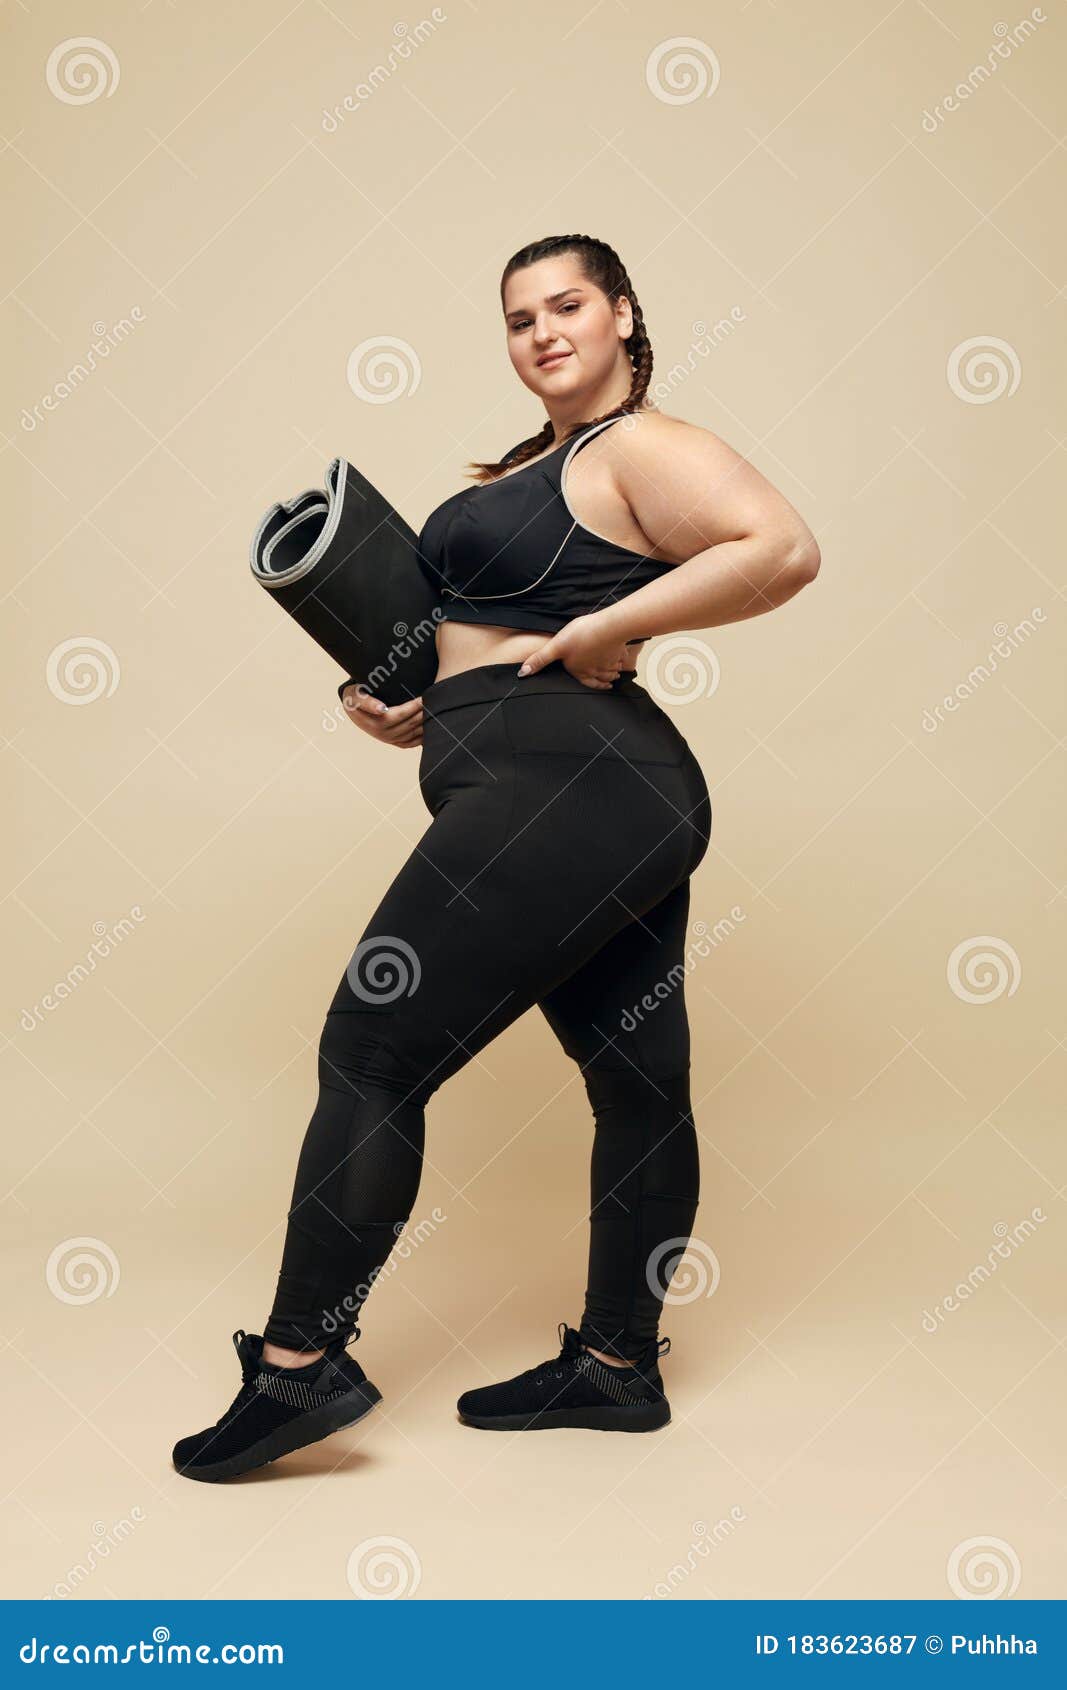 Size Model. Fat Woman Black Sportswear Full-Length Portrait. Smiling Brunette Holding Fitness Mat. Stock Image - Image of plump, lifestyle: 183623687